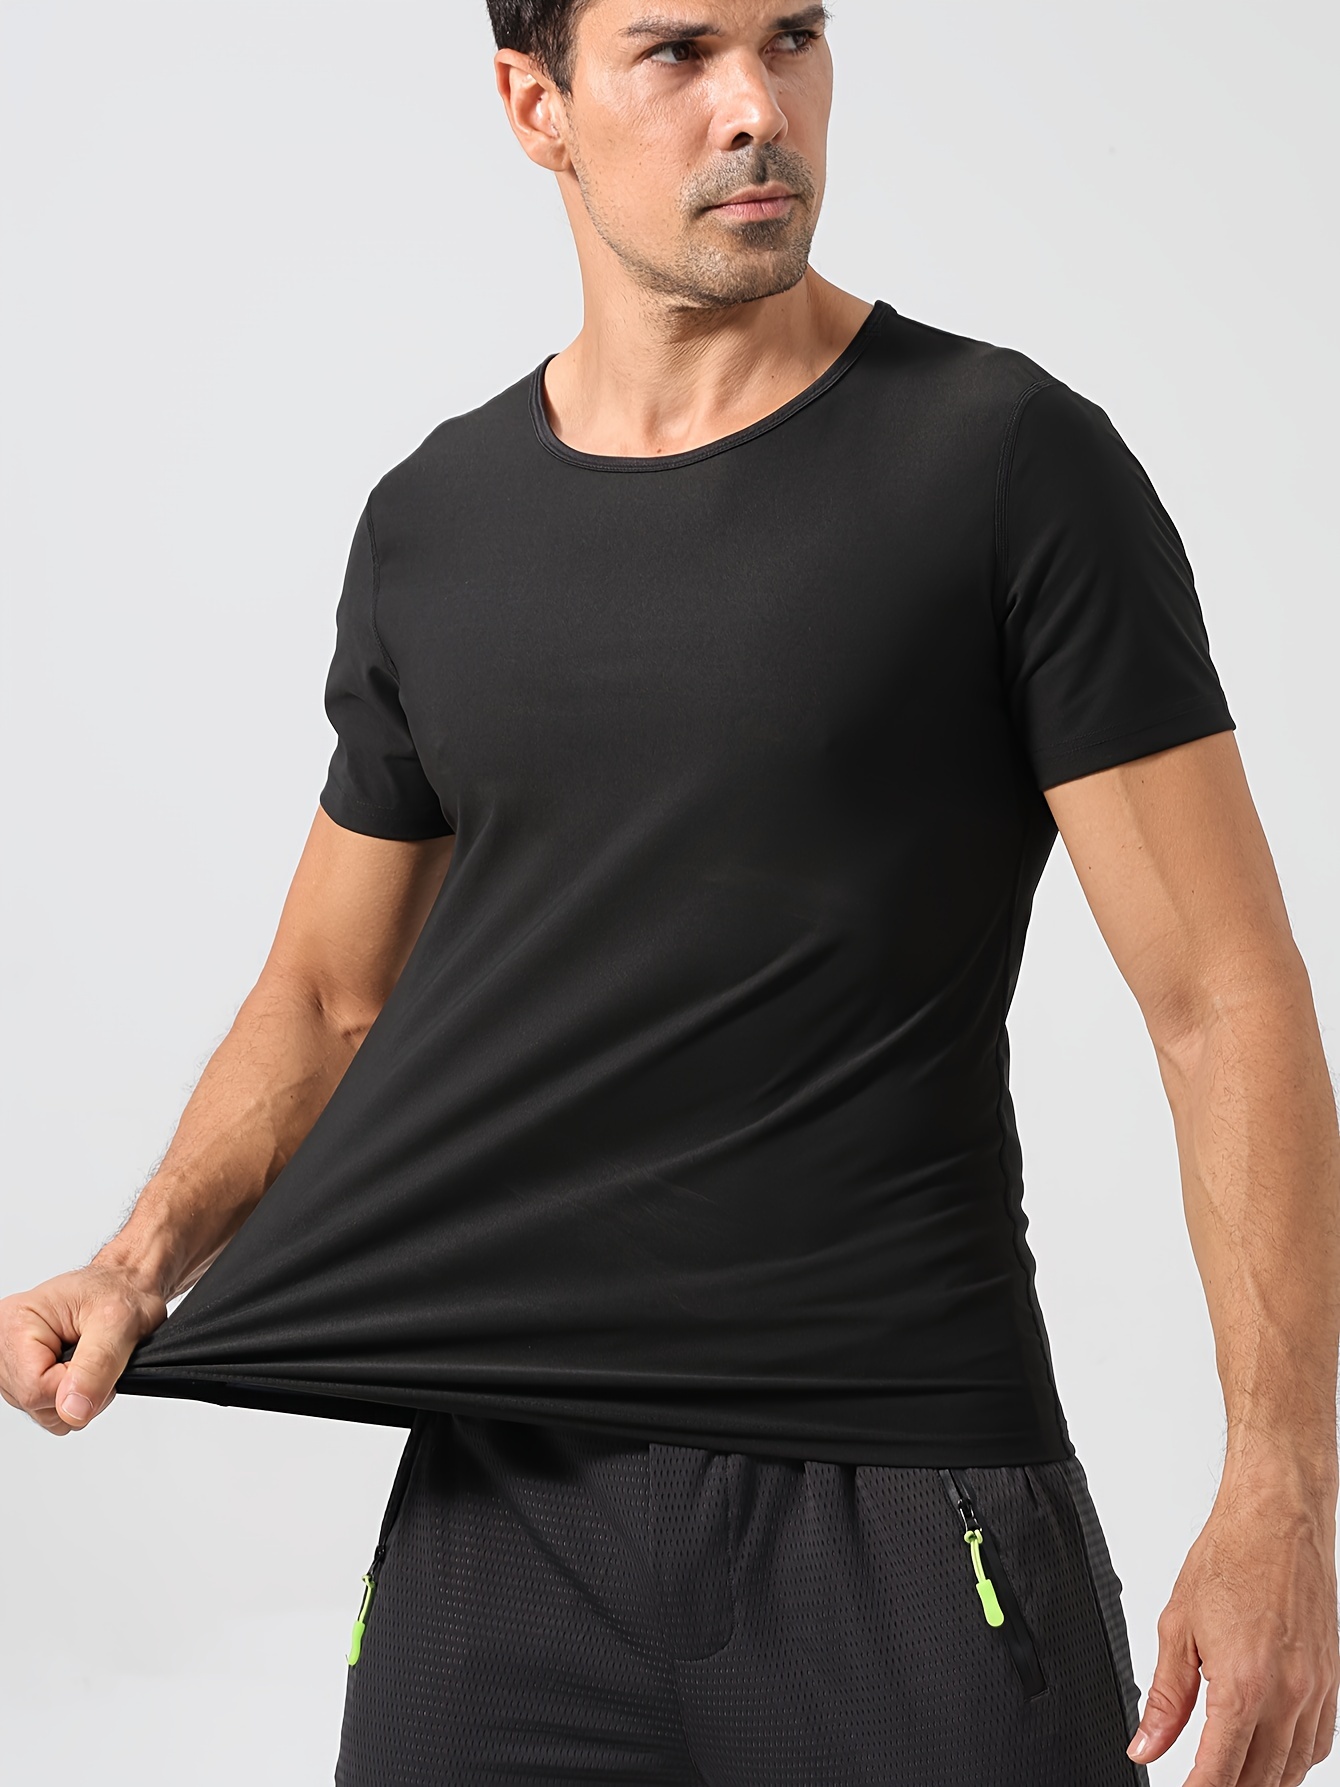 Fashion Men Compression Shirt Workout Shapewear Sweat Sauna Body